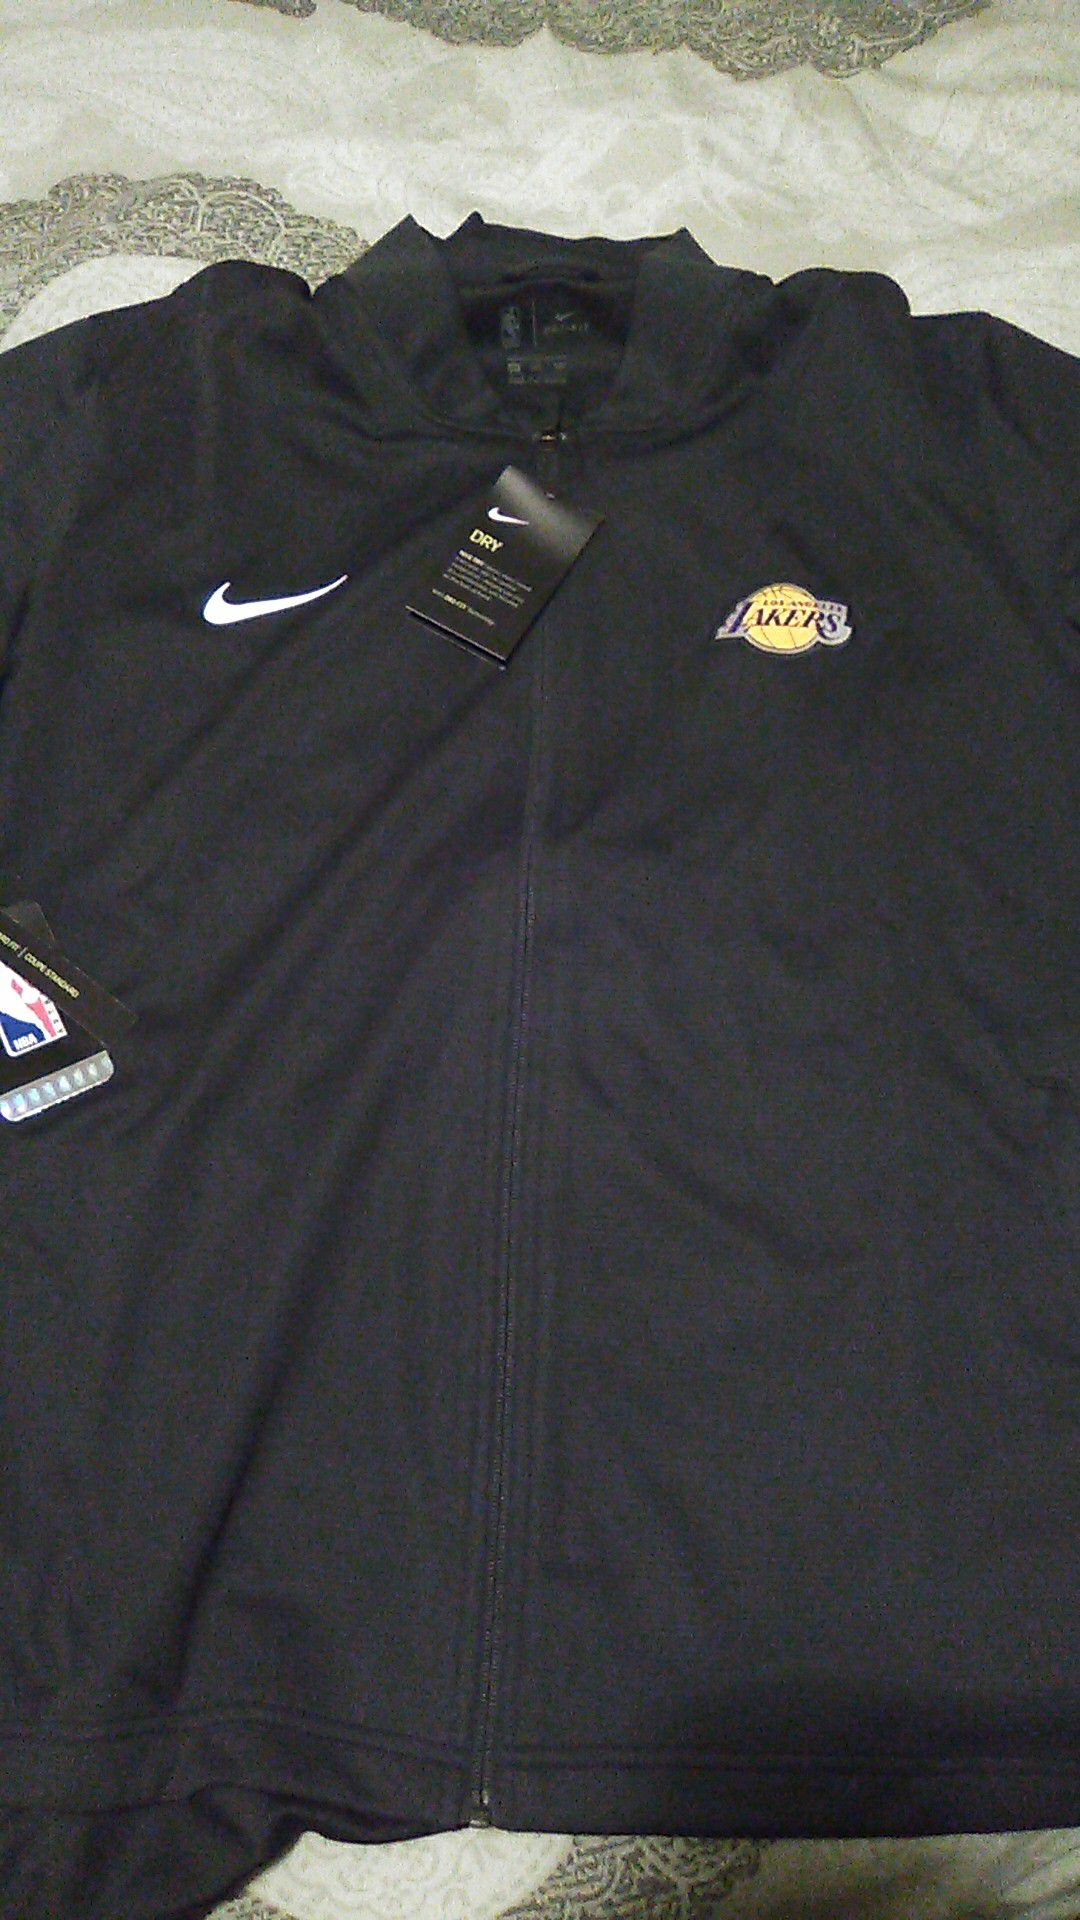 Nike NBA Lakers jacket color gray and all black